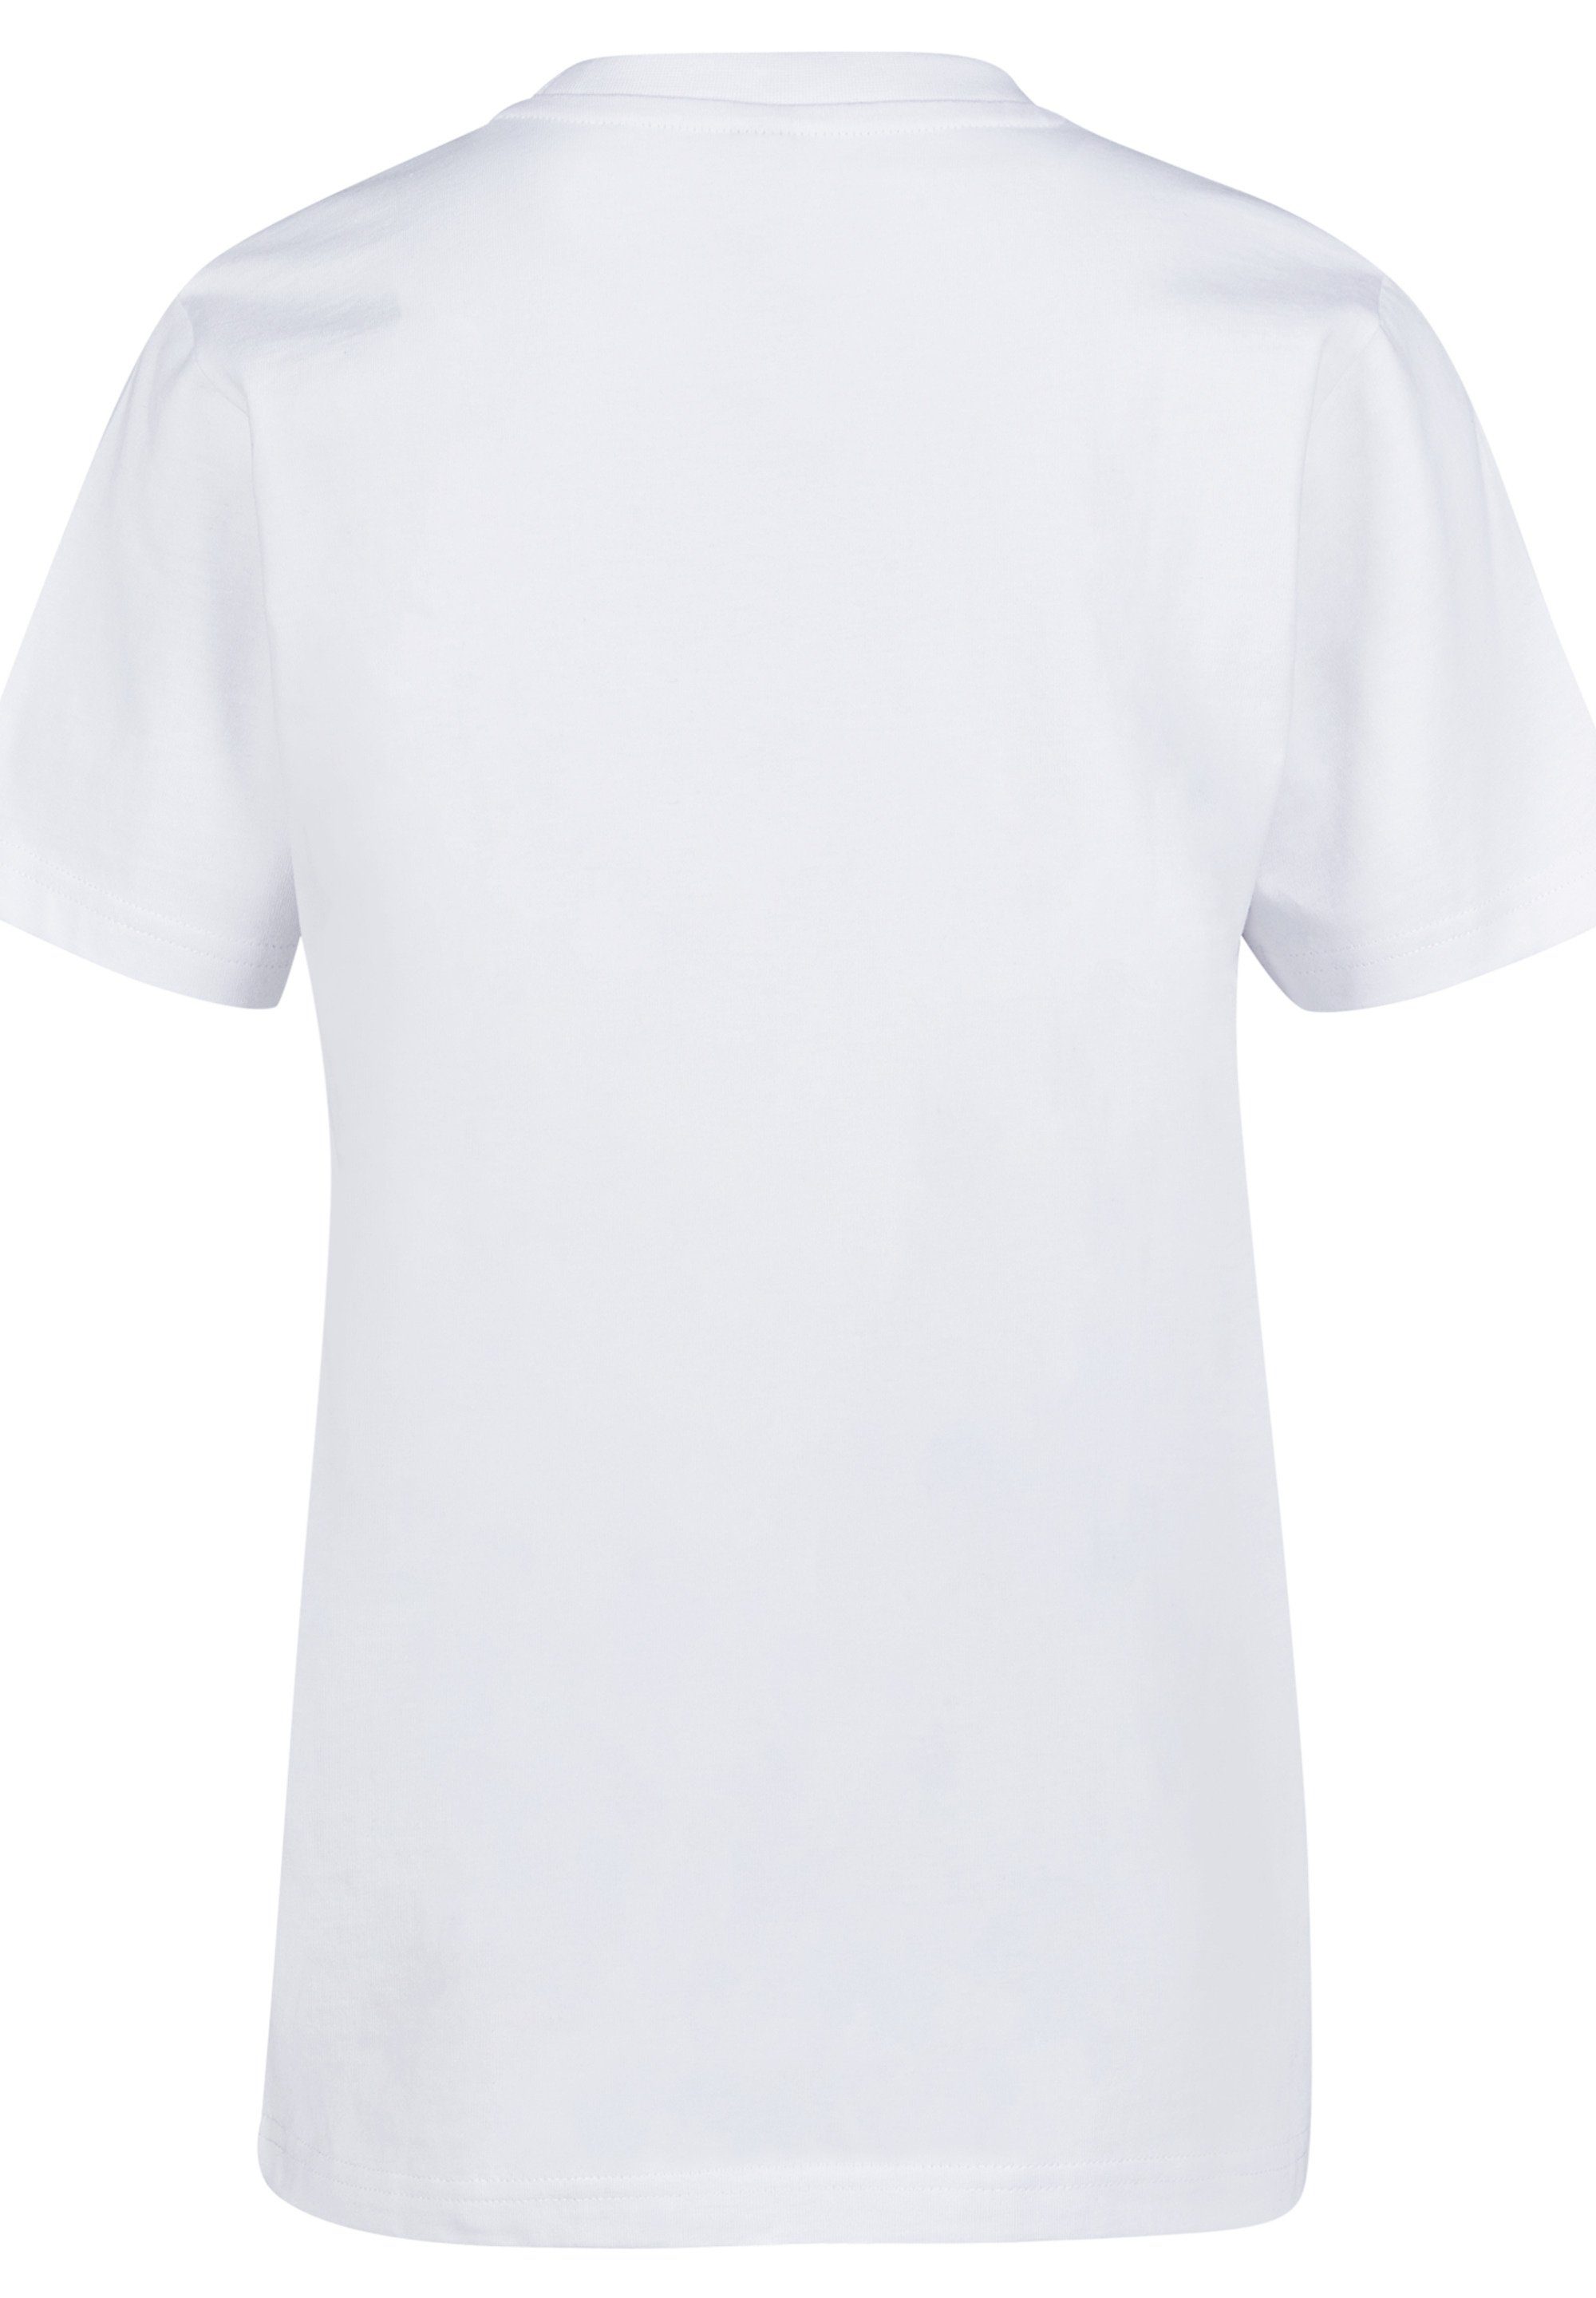 F4NT4STIC One T-Shirt Tone weiß NASA Logo Print